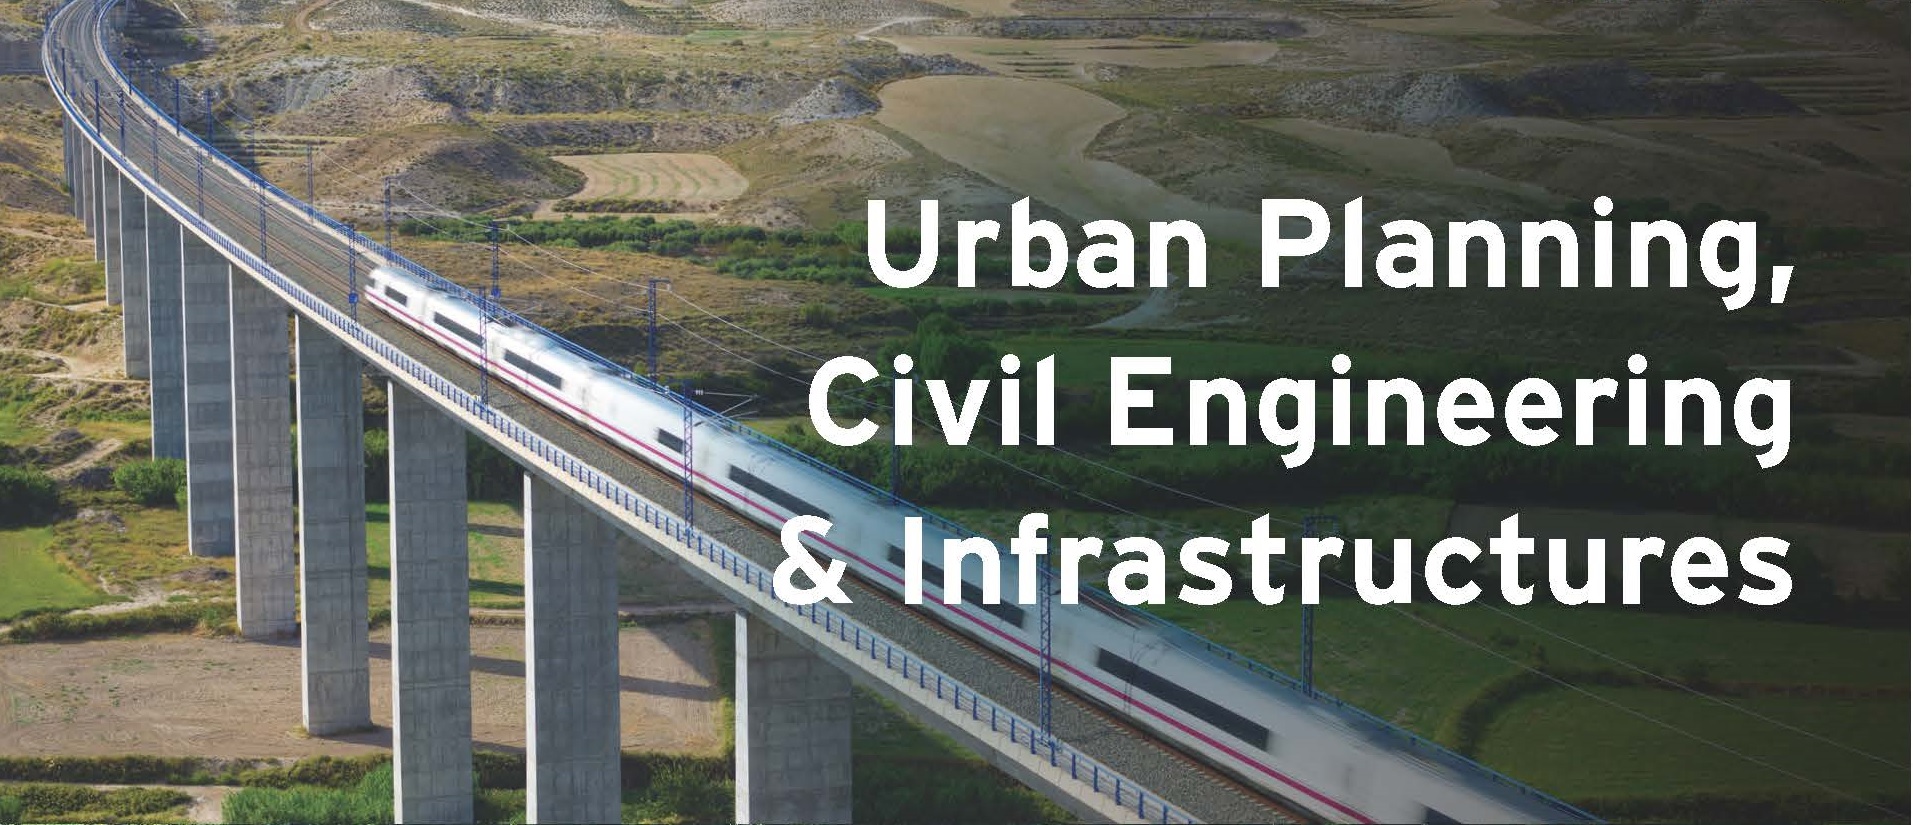 Urban Planning, Civil Engineering & Infrastructures